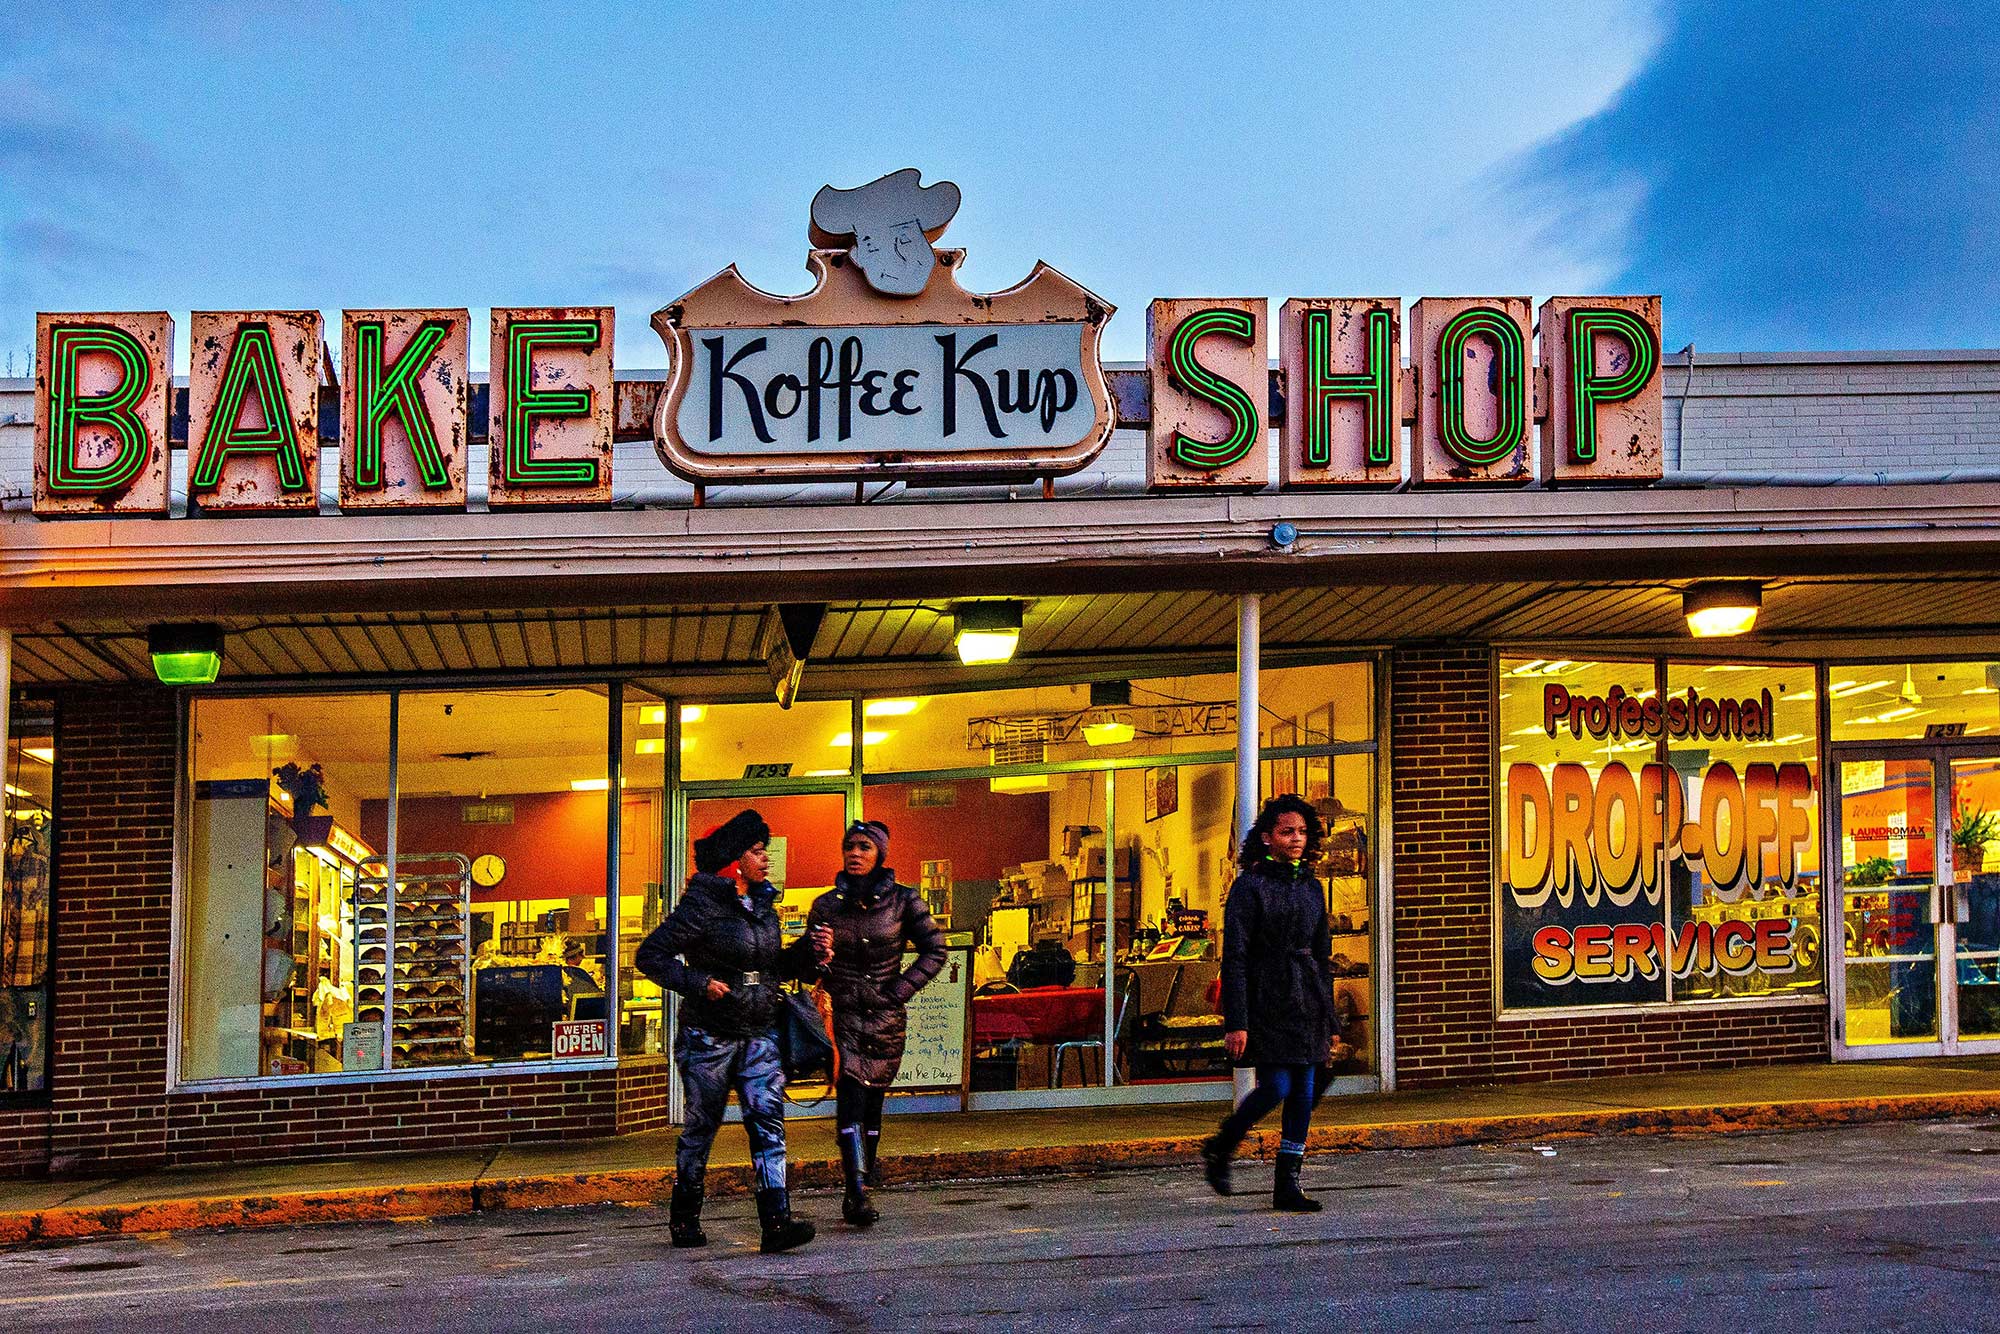 Koffee Kup Bake Shop, Springfield, MA - 1/22/15